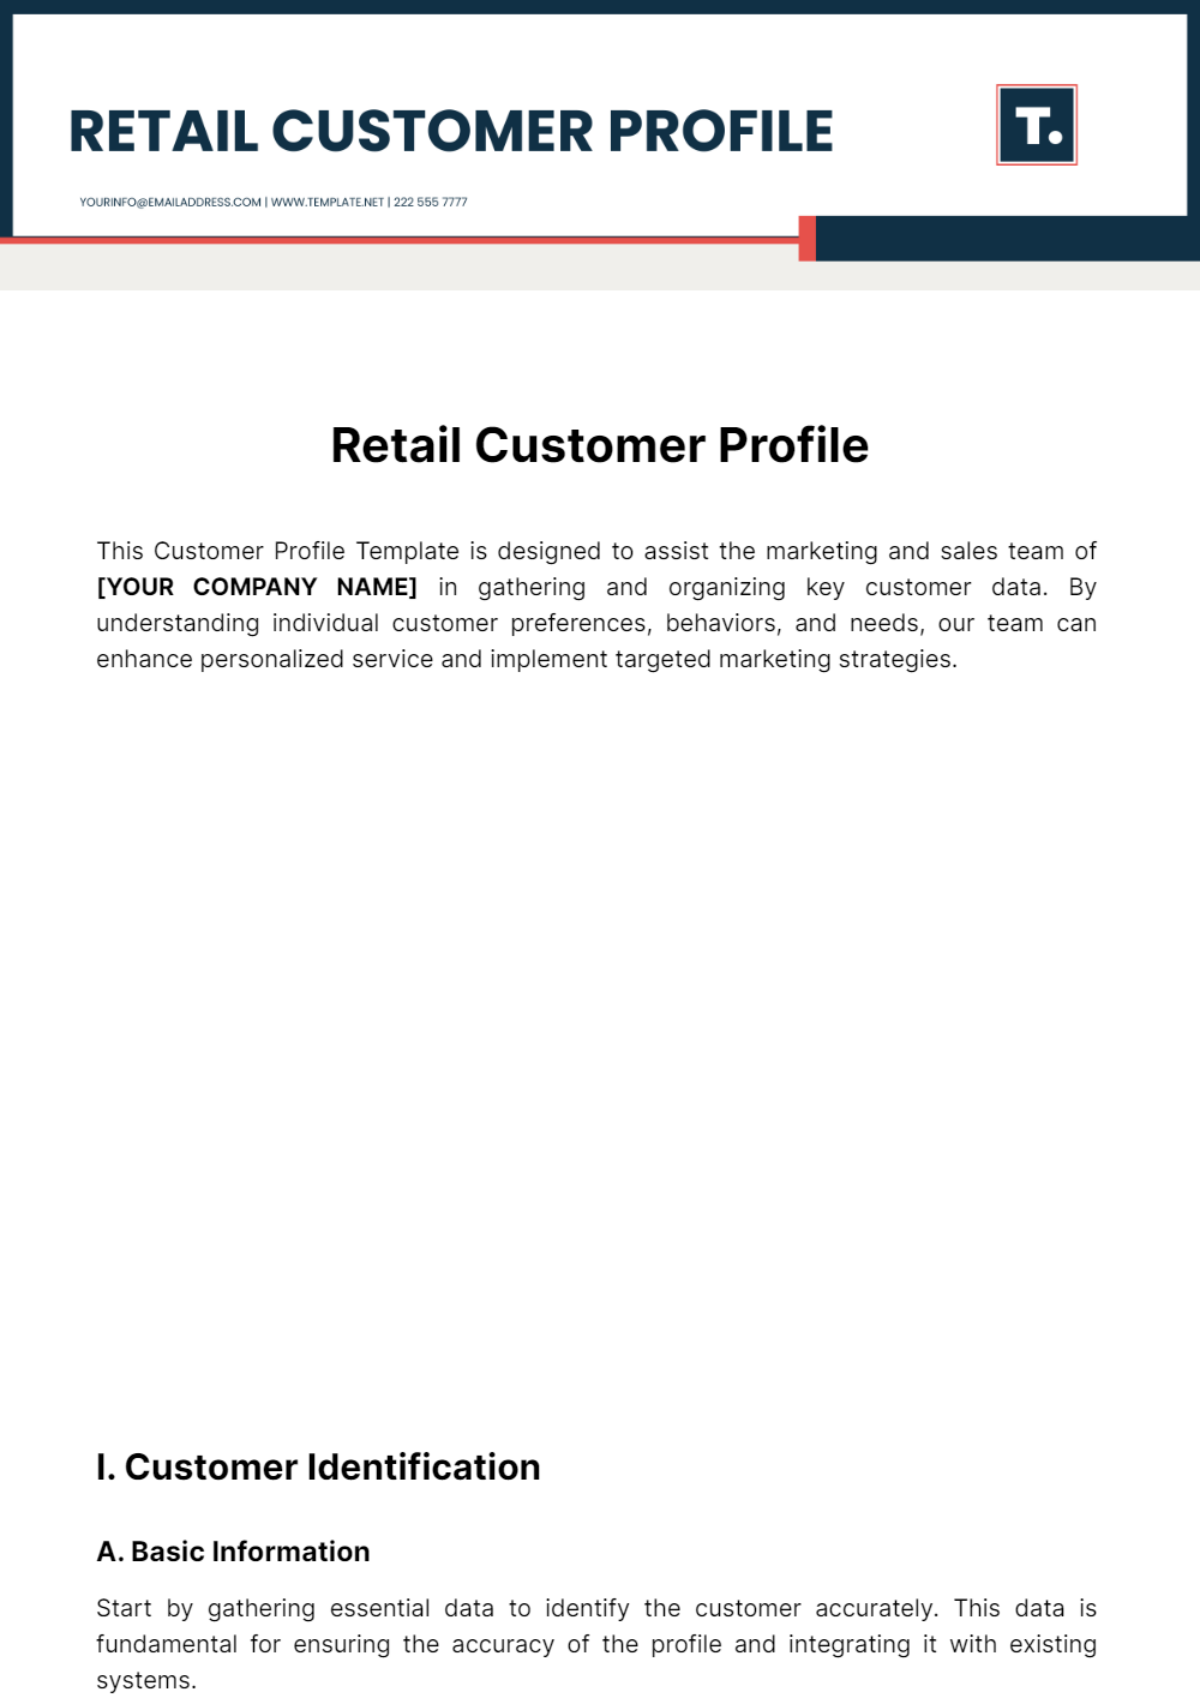 Retail Customer Profile Template